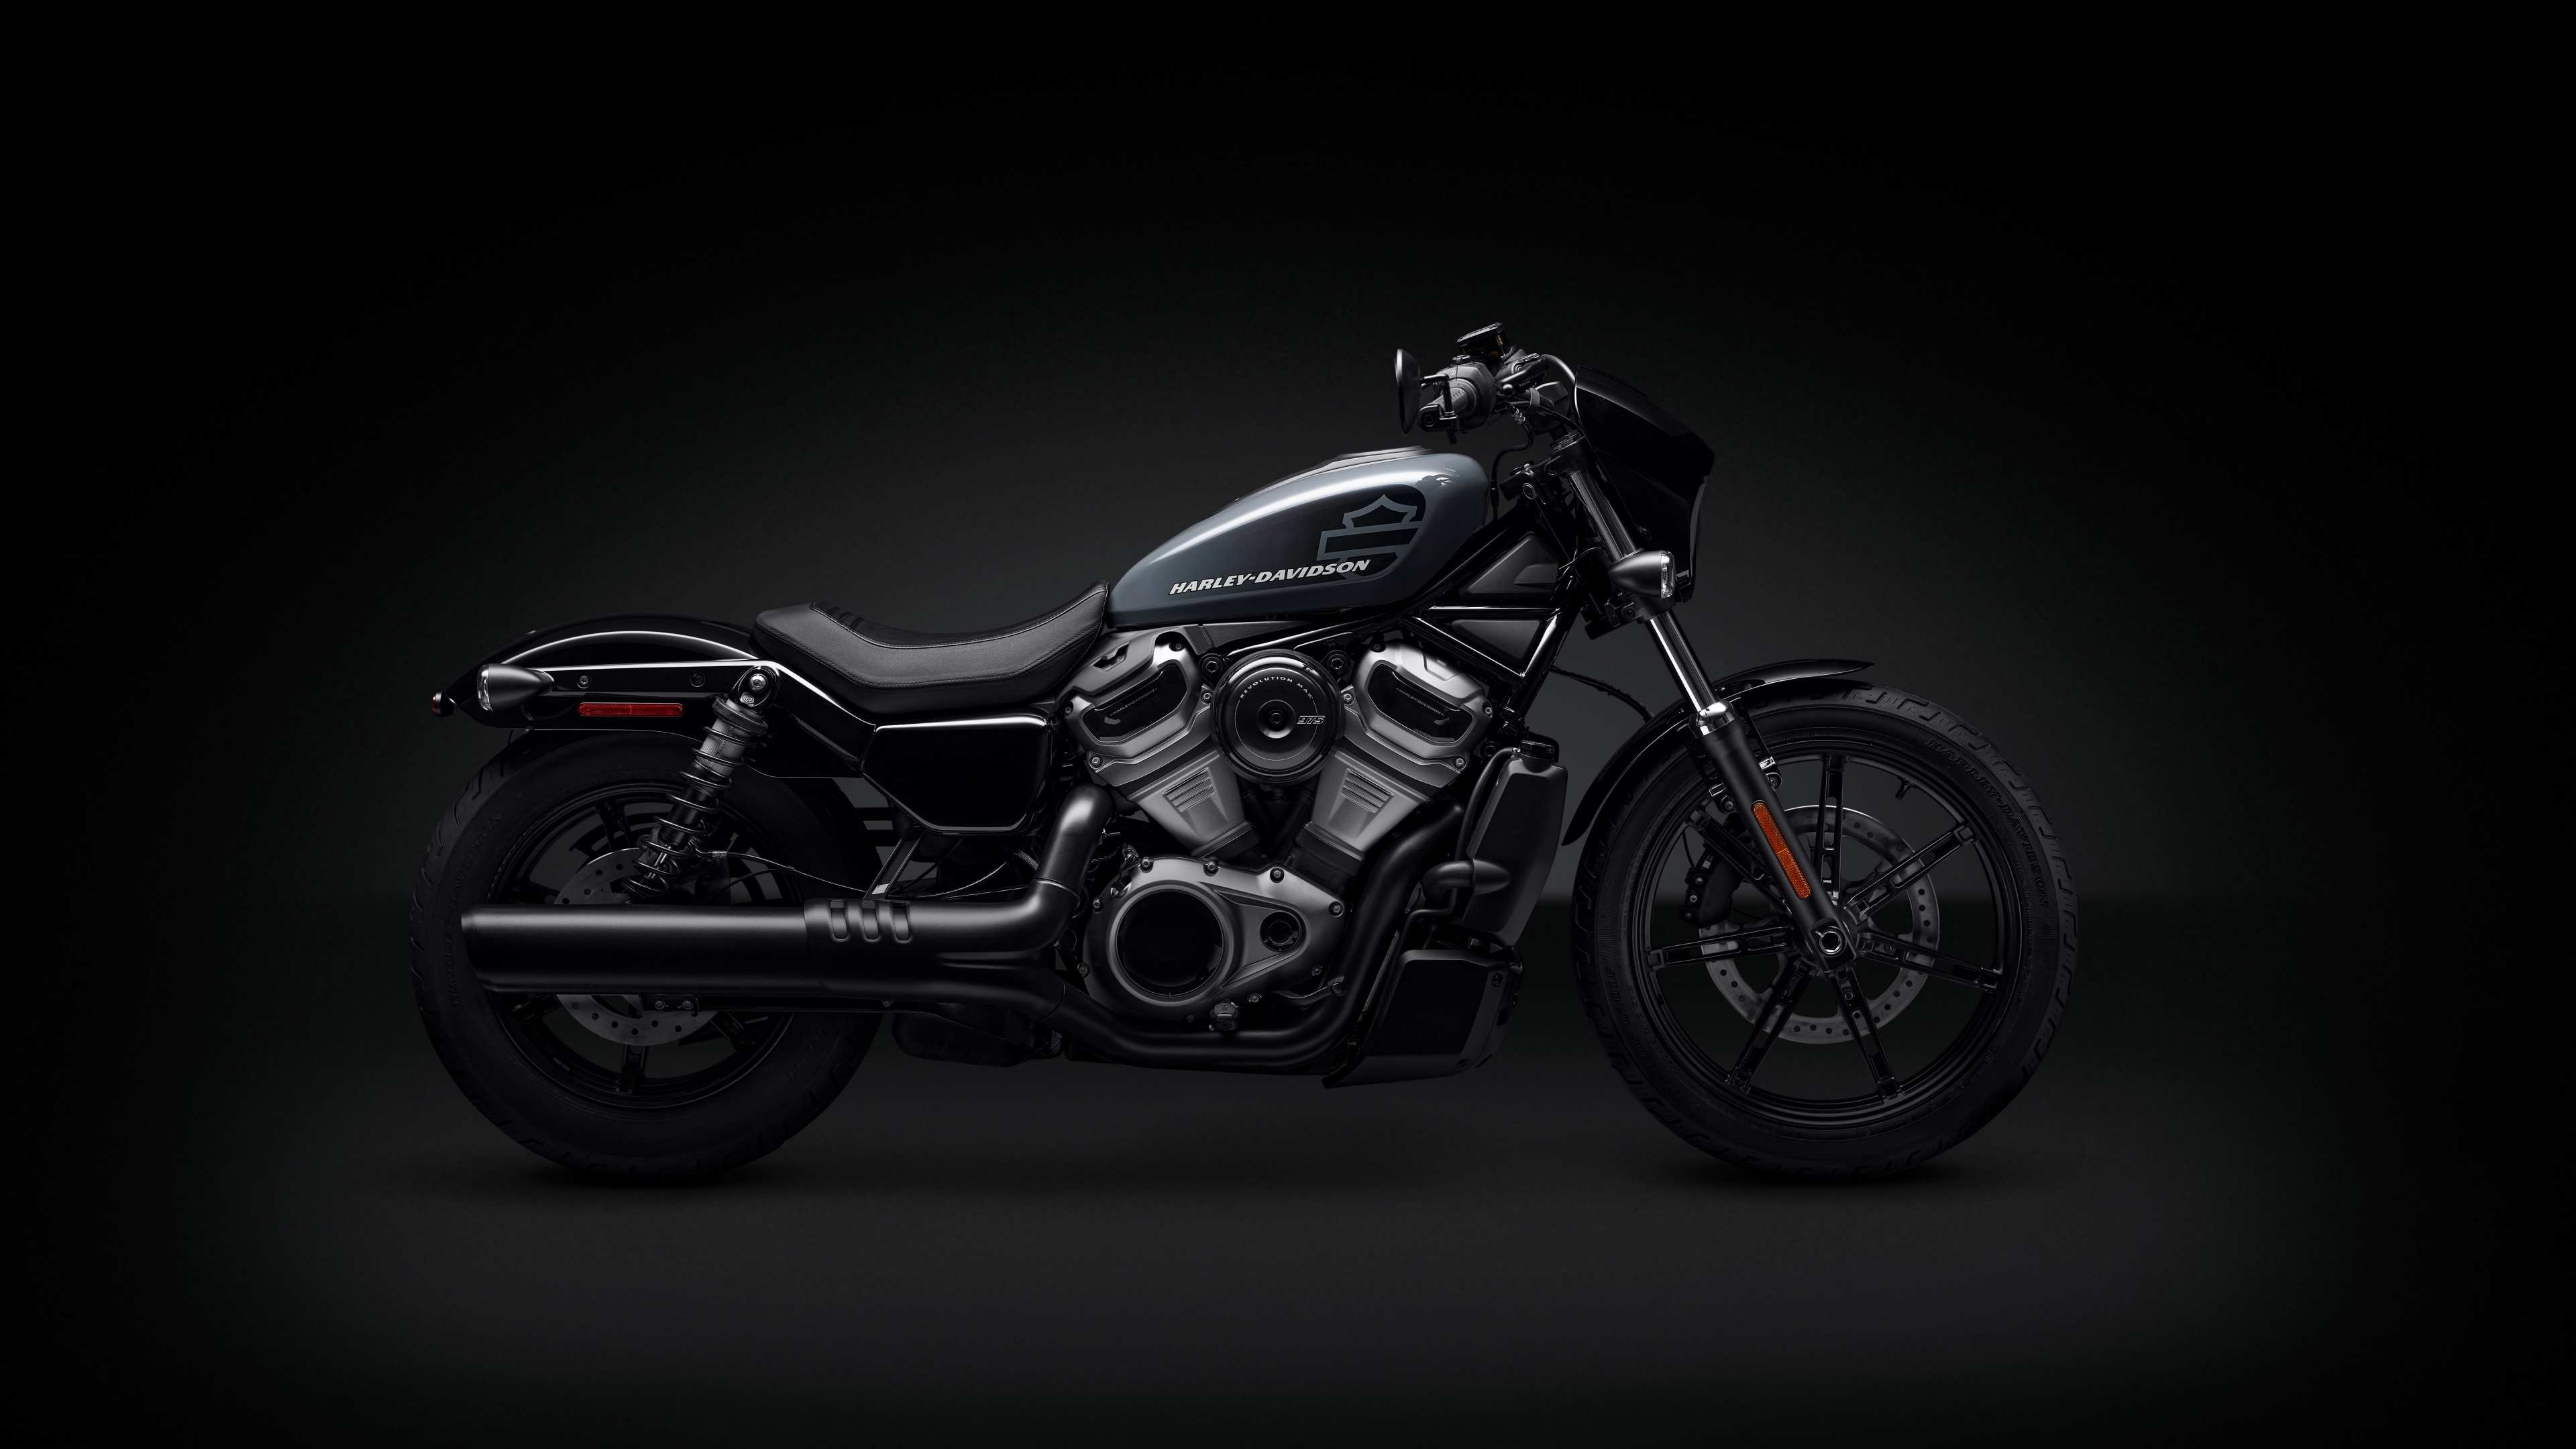 Harley-Davidson Nightster, Auto, Cruiser motorcycle, Blackdark, 3840x2160 4K Desktop